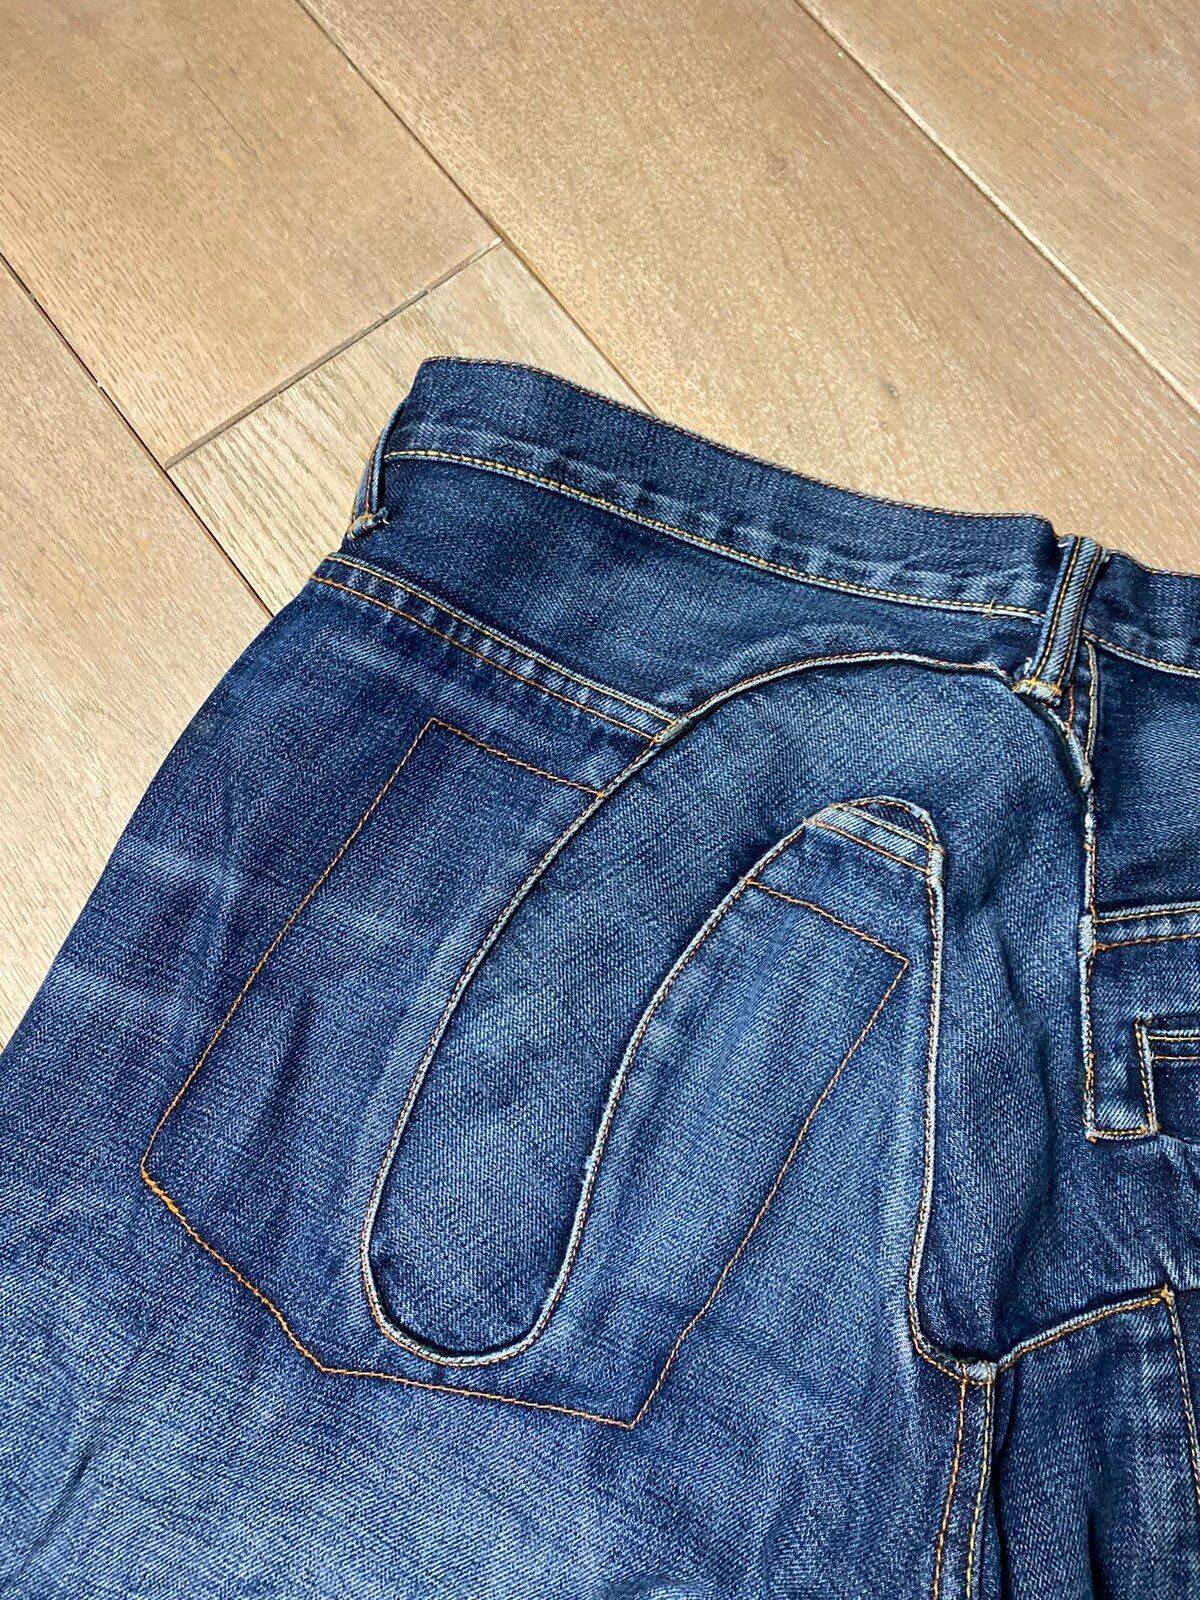 Vintage Evisu Japan vintage blue jeans denim pants big seagull logo Size US 38 / EU 54 - 4 Thumbnail